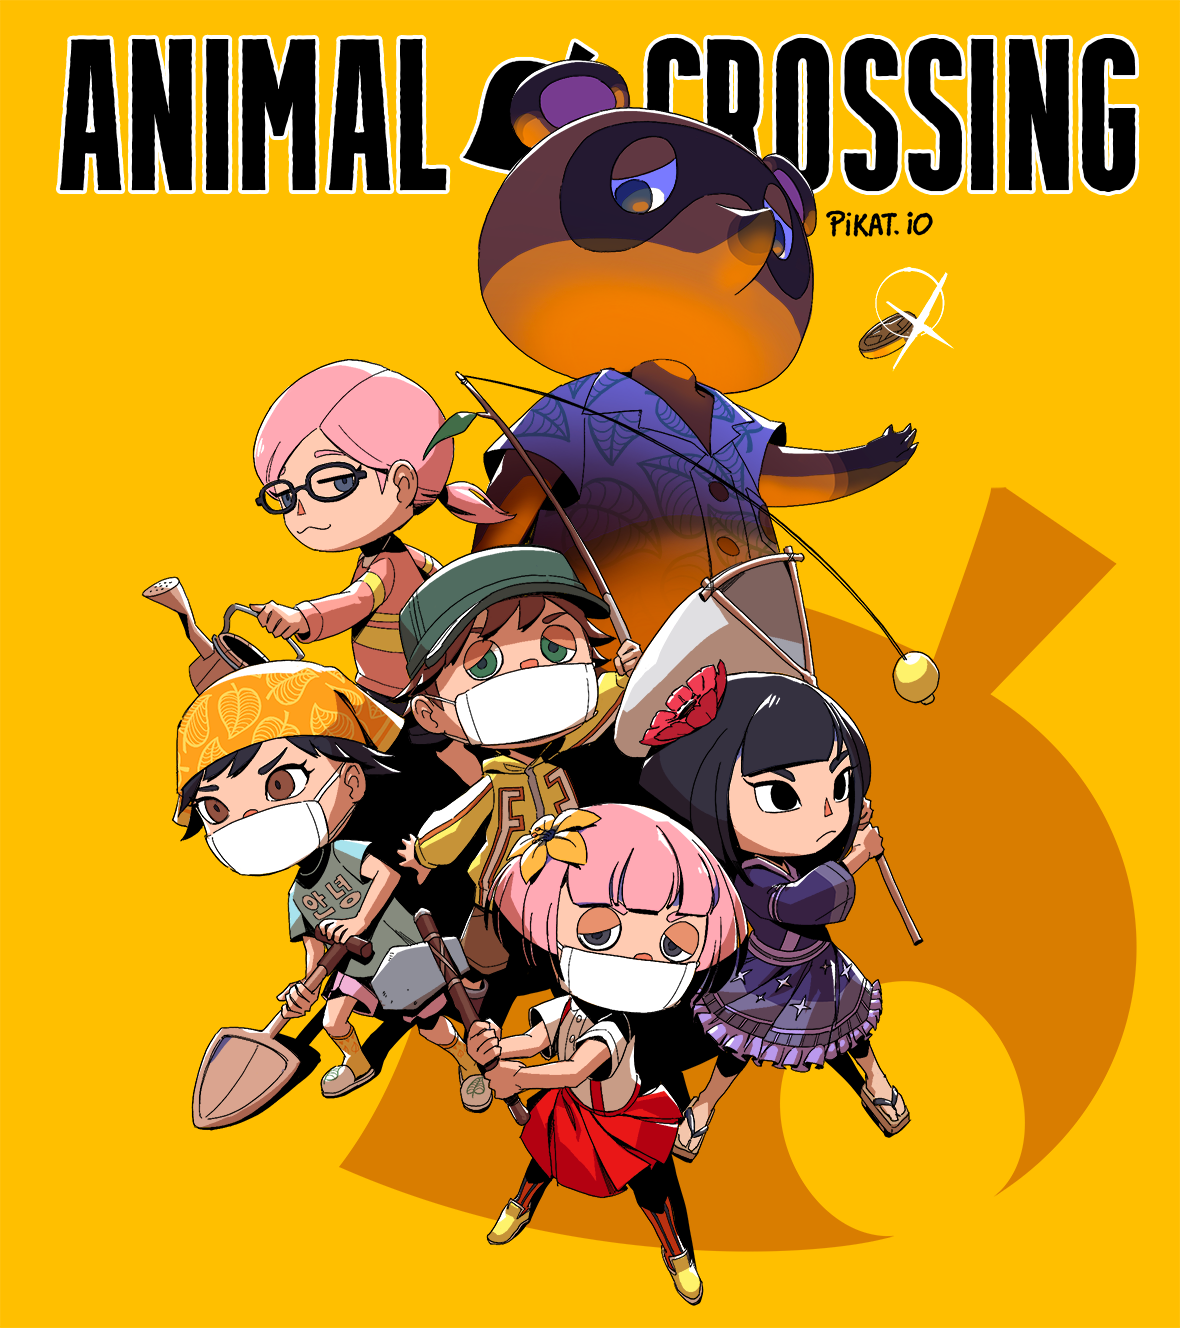 Animal Crossing Sales, Animal Crossing: New Horizon Sales, Animal Crossing: New Horizons, Isabelle, New Horizons, Nintendo, Nintendo Switch, Shizue, Switch, Tom Nook, Villager